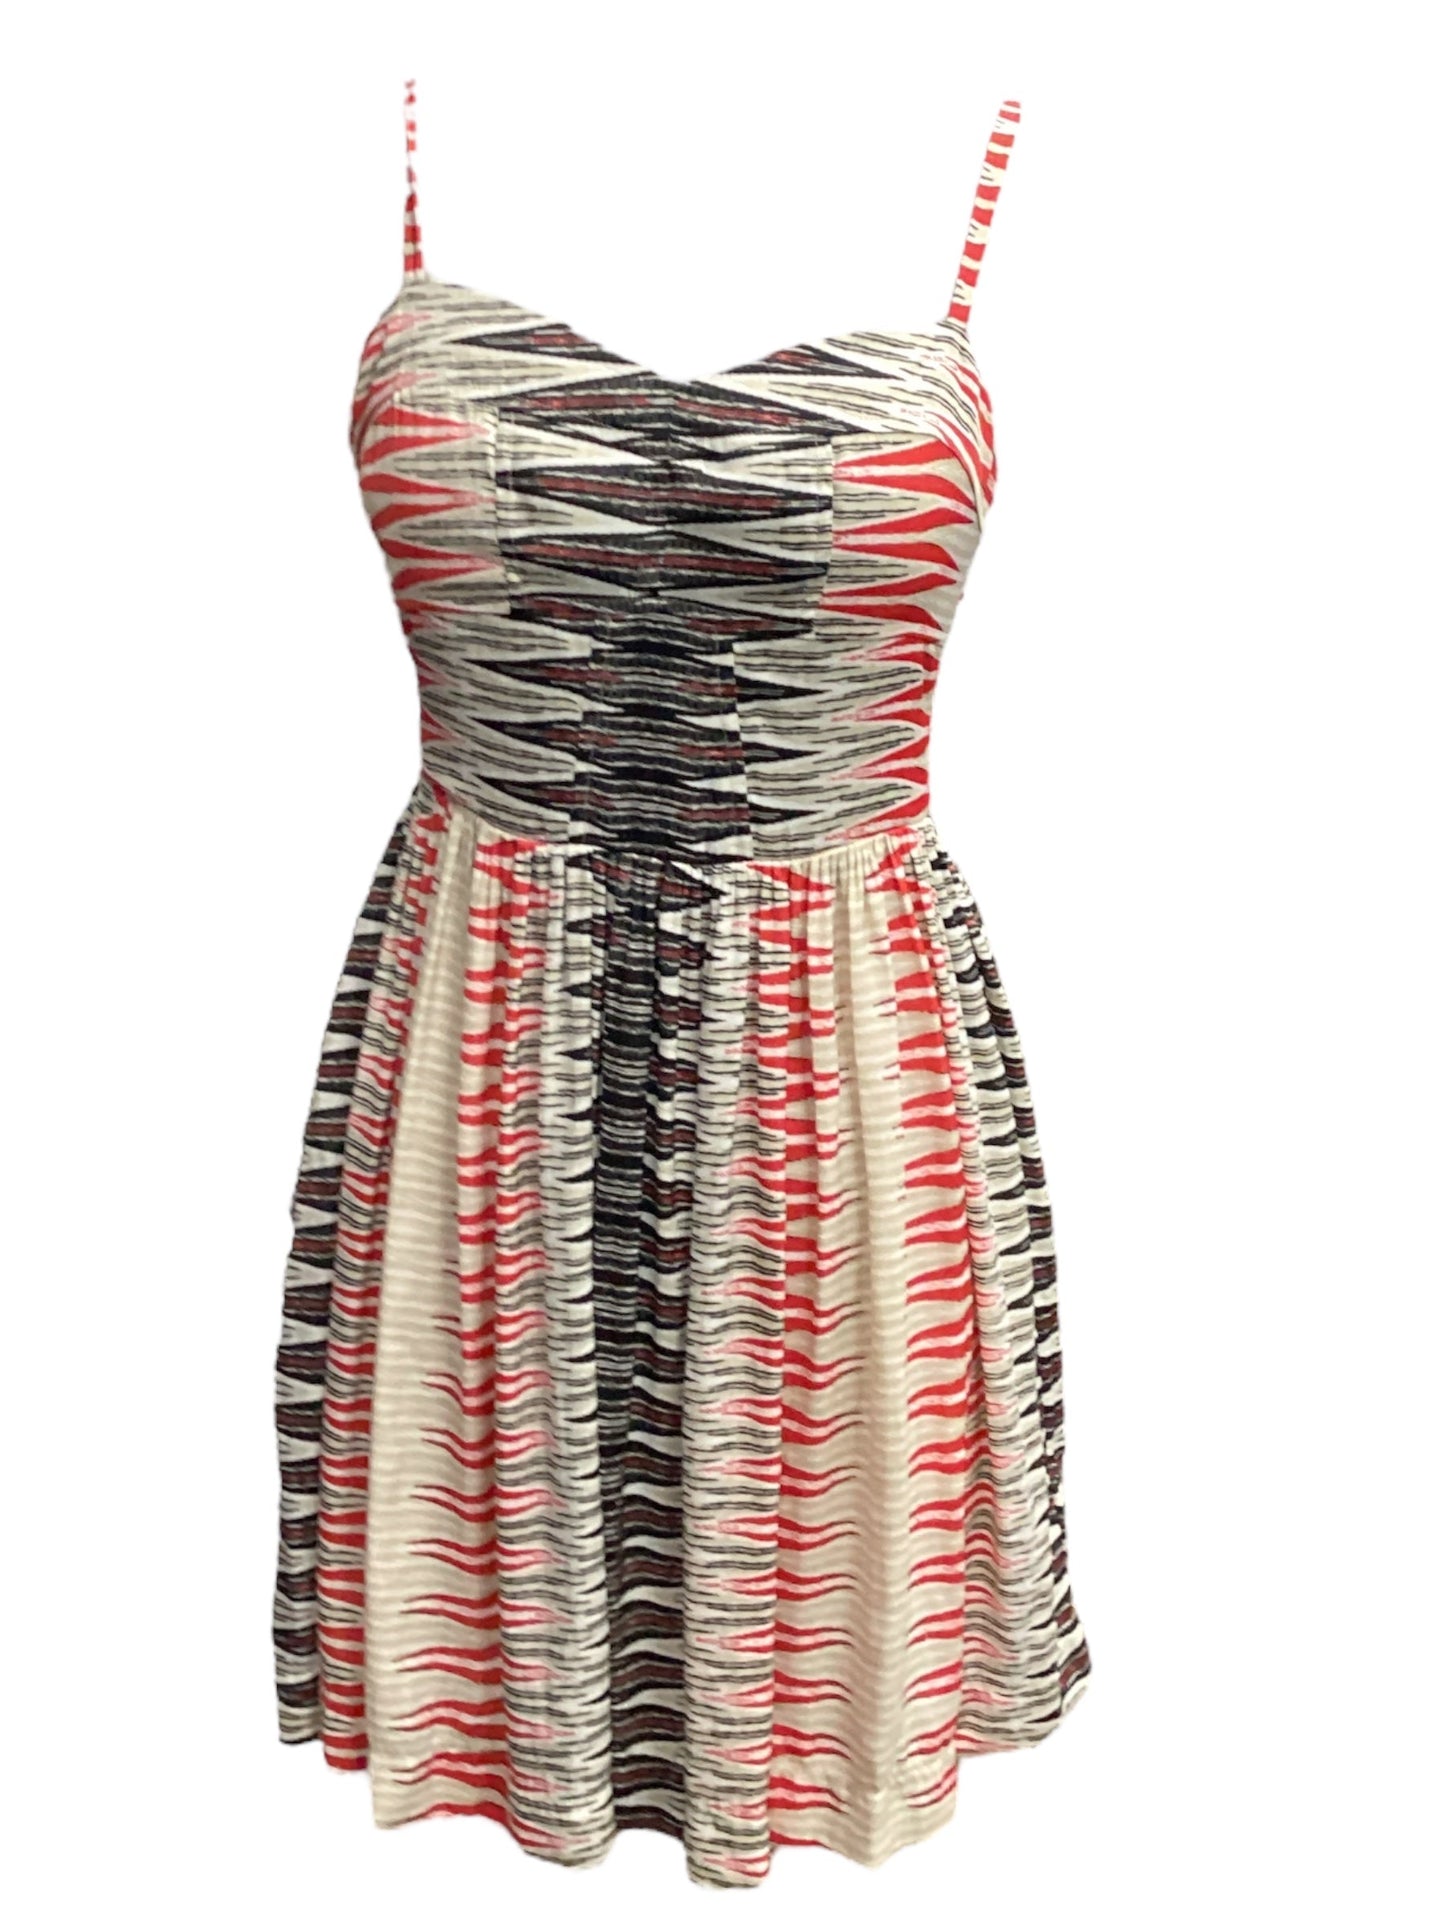 Multi-colored Dress Casual Midi Tart, Size Xs